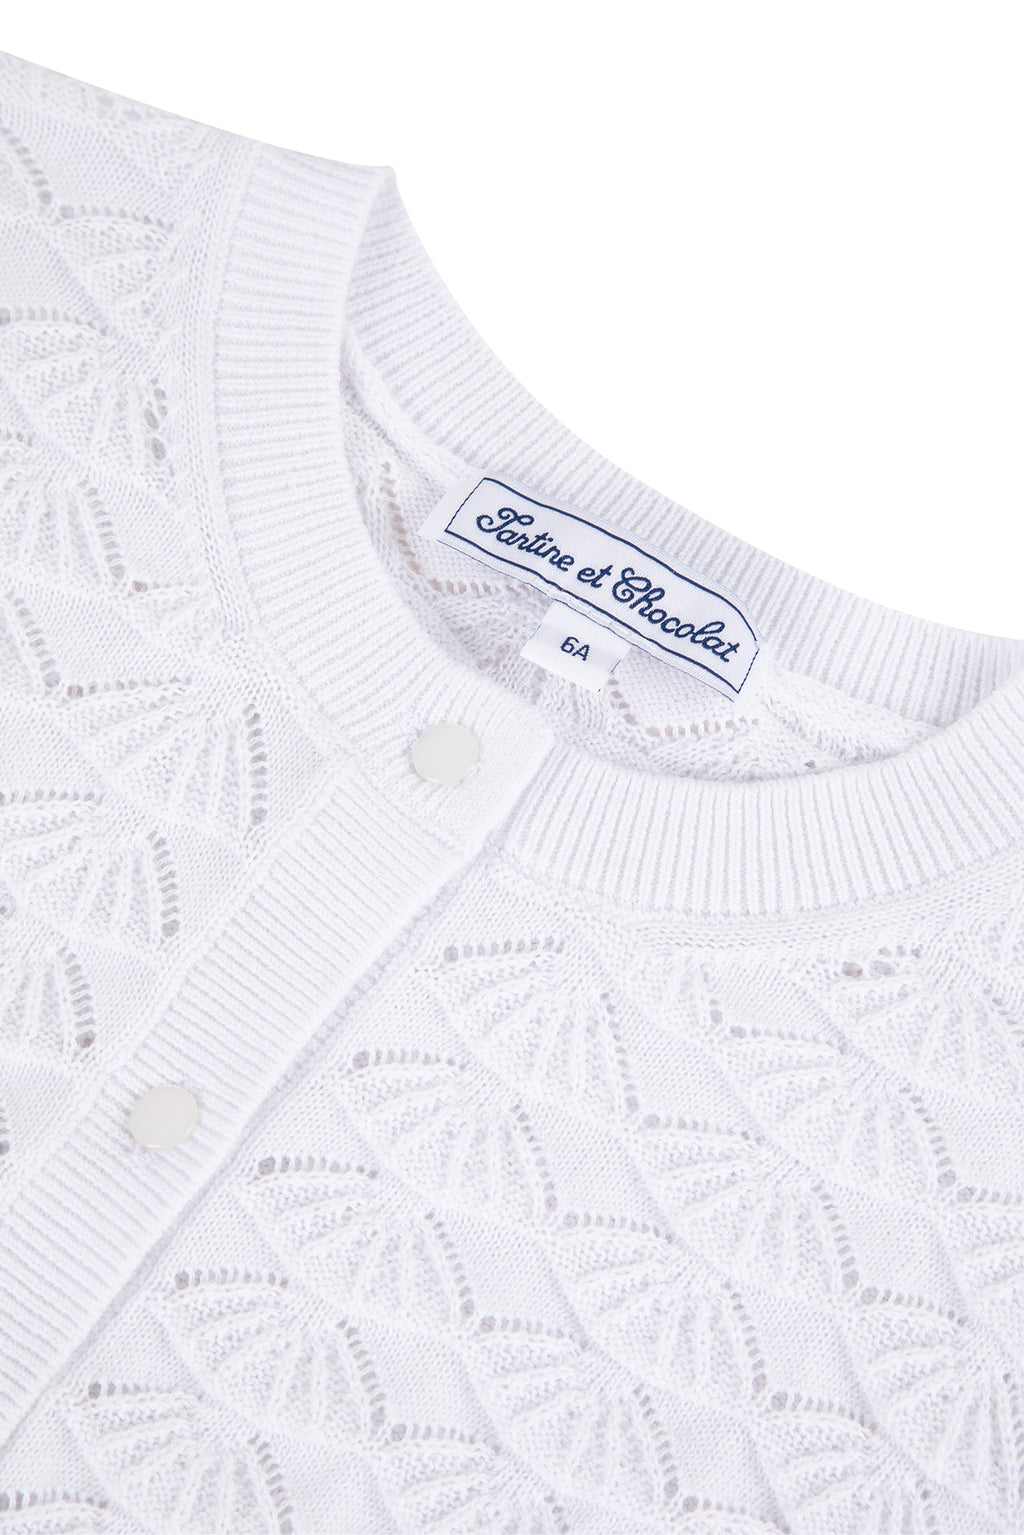 Cardigan - White Knitwear openwork